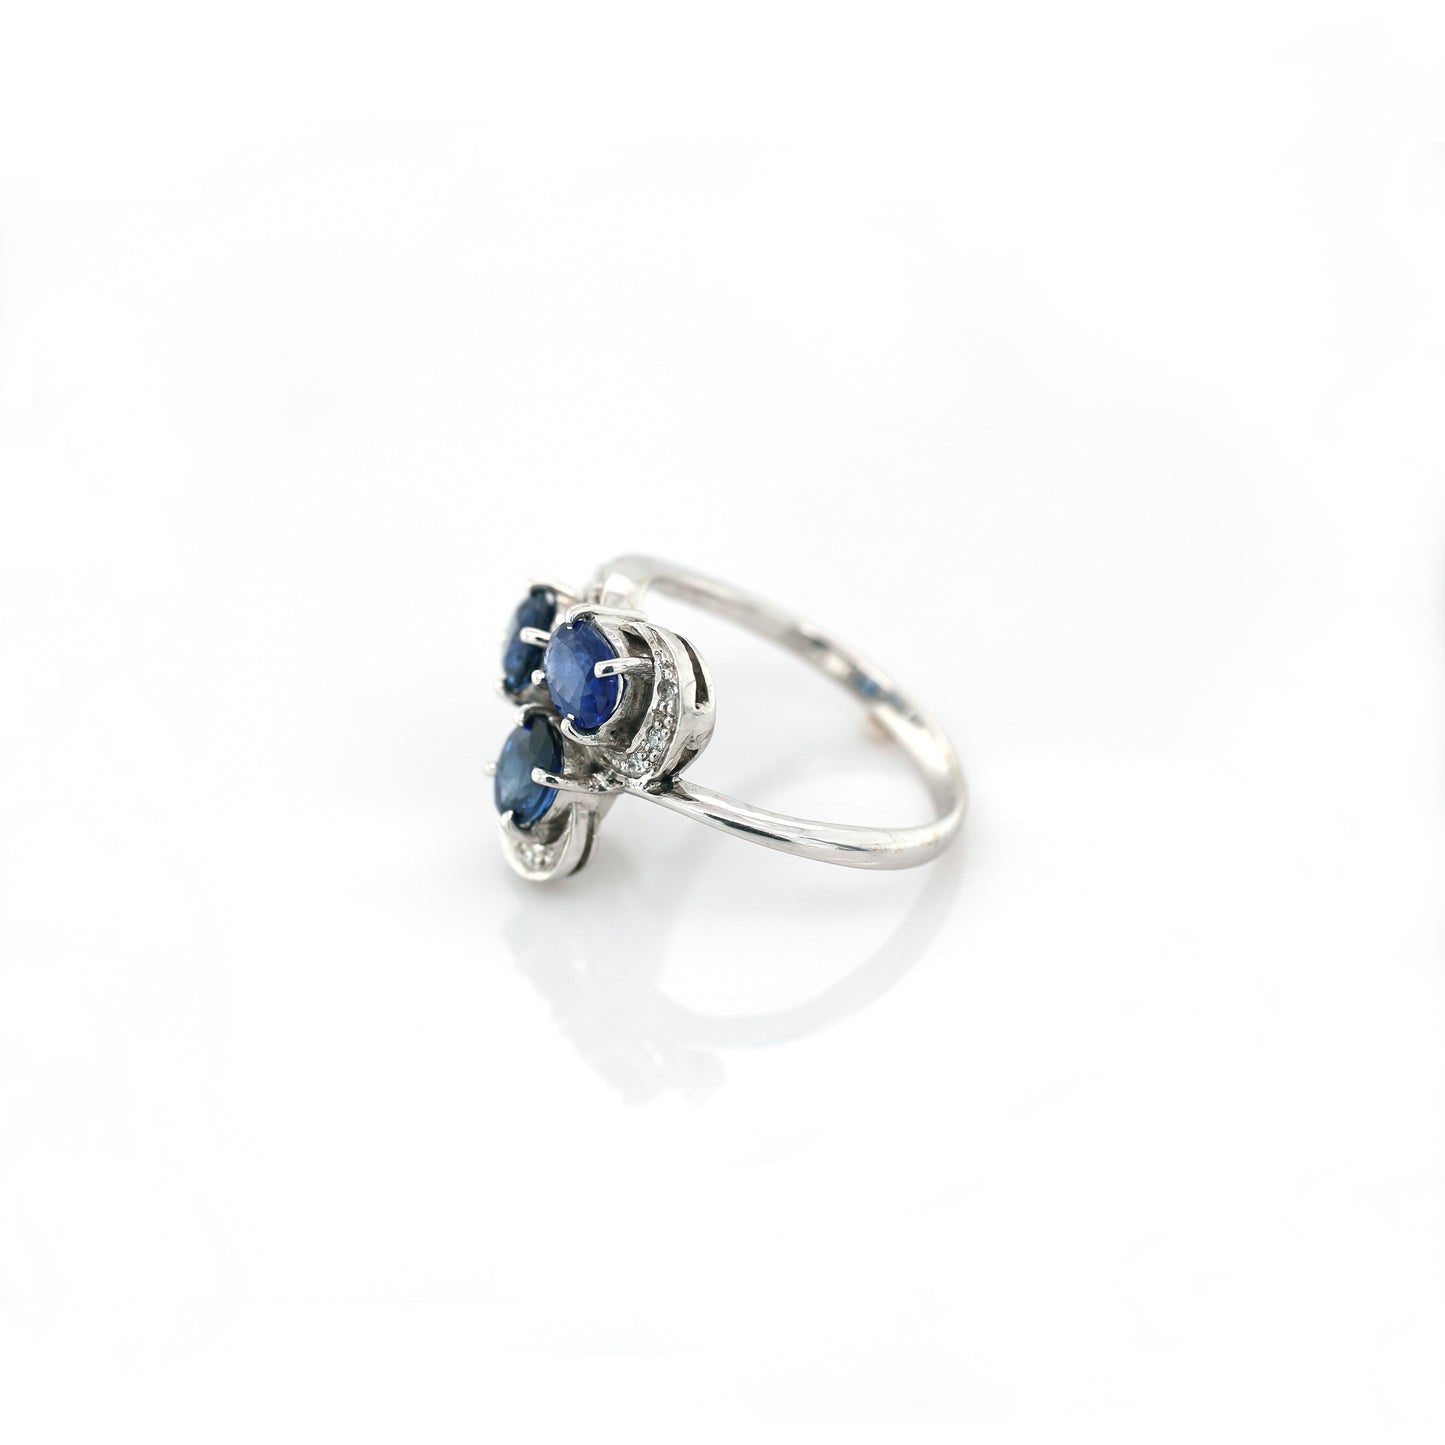 Blue Sapphire & Diamond Ring - 14K White Gold  5.14gm